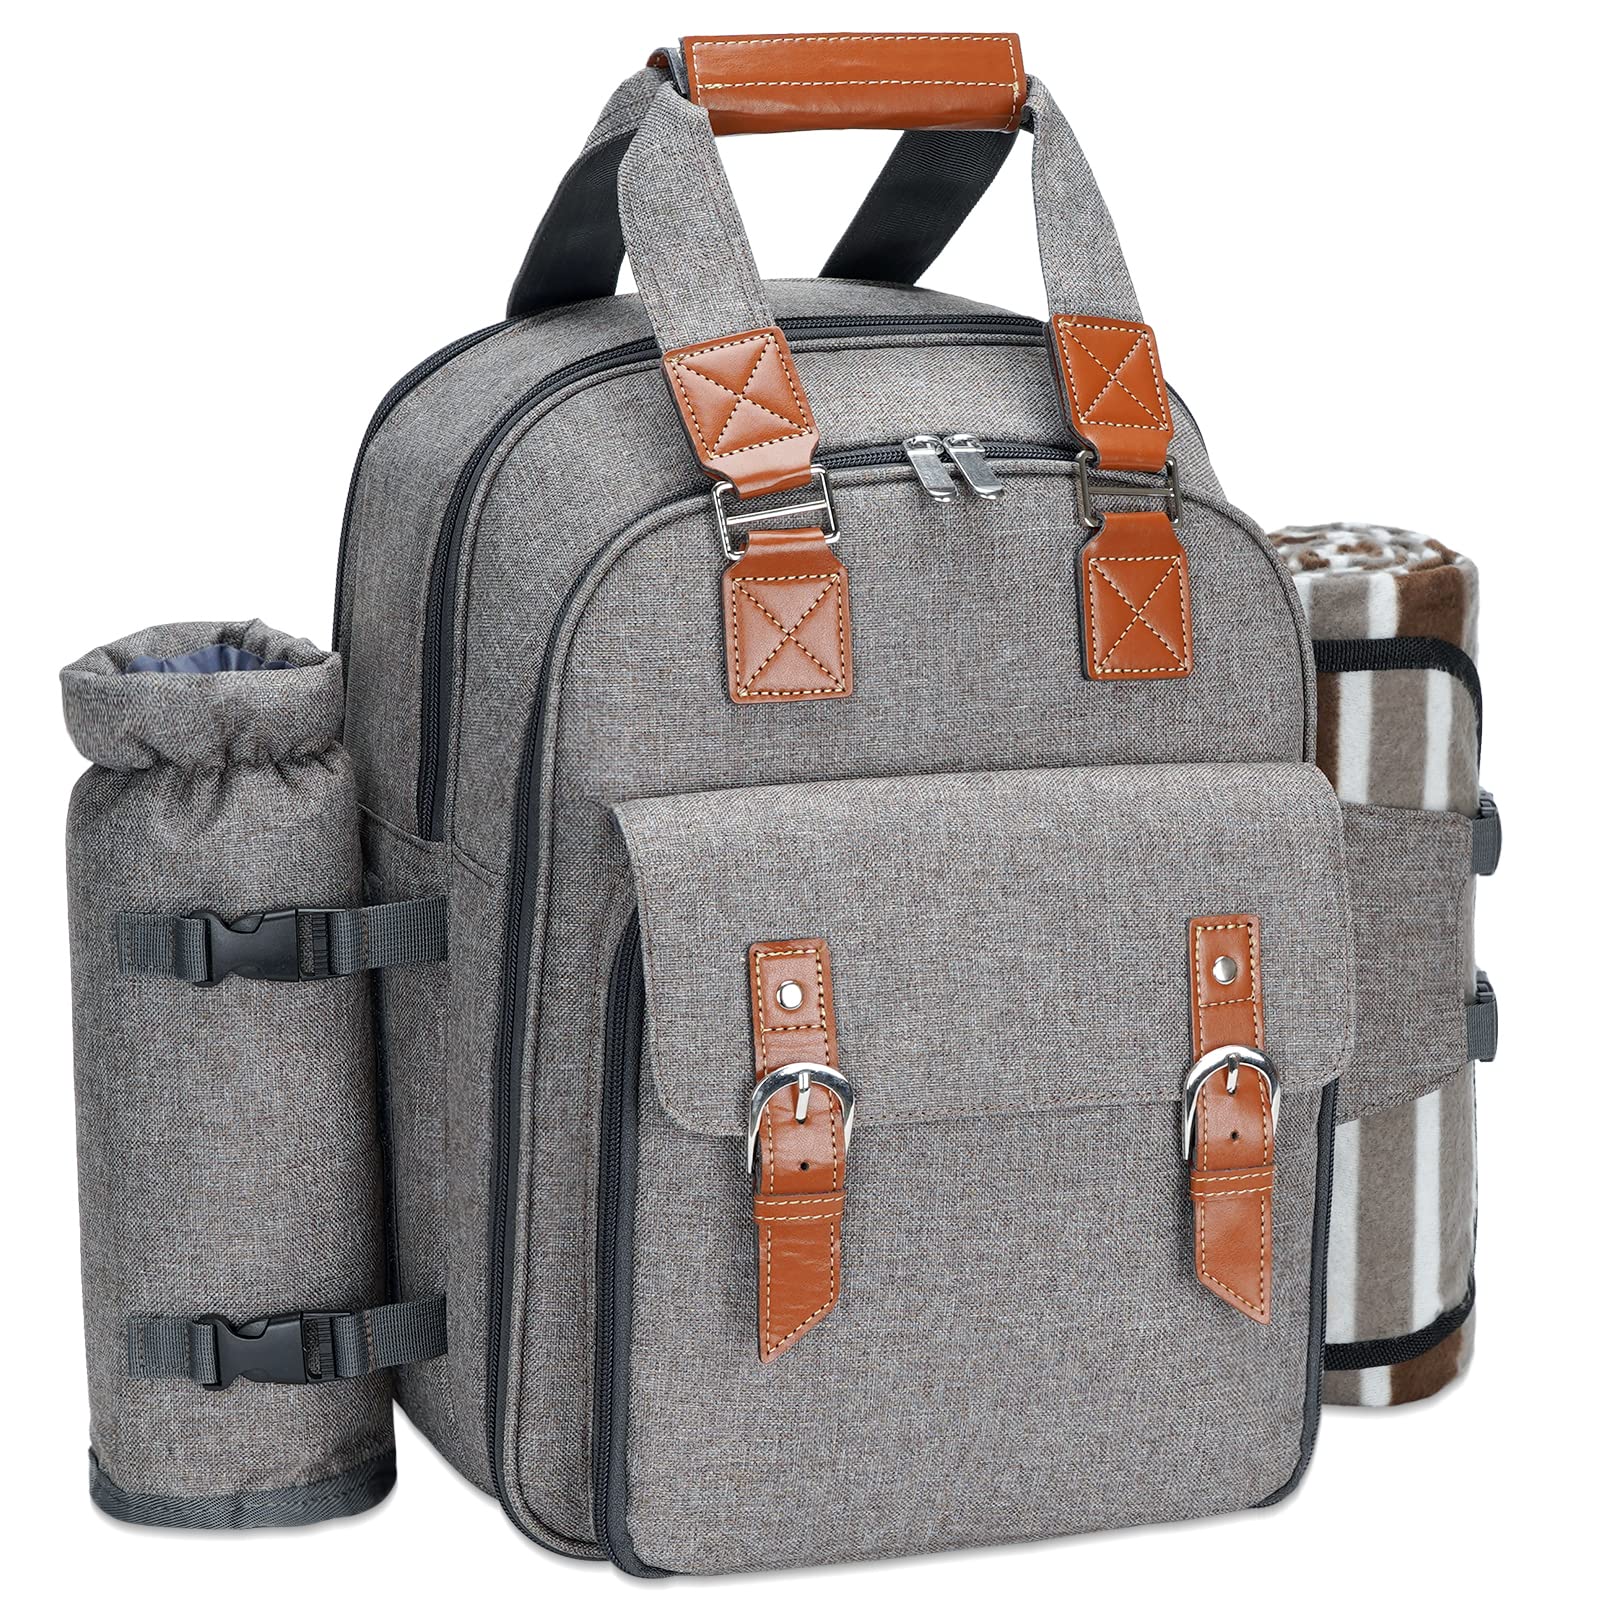 Plush Picnic - 2 Person Picnic Backpack / Picnic Basket with Cooler Compartment, Detachable Bottle/Wine Holder, Fleece